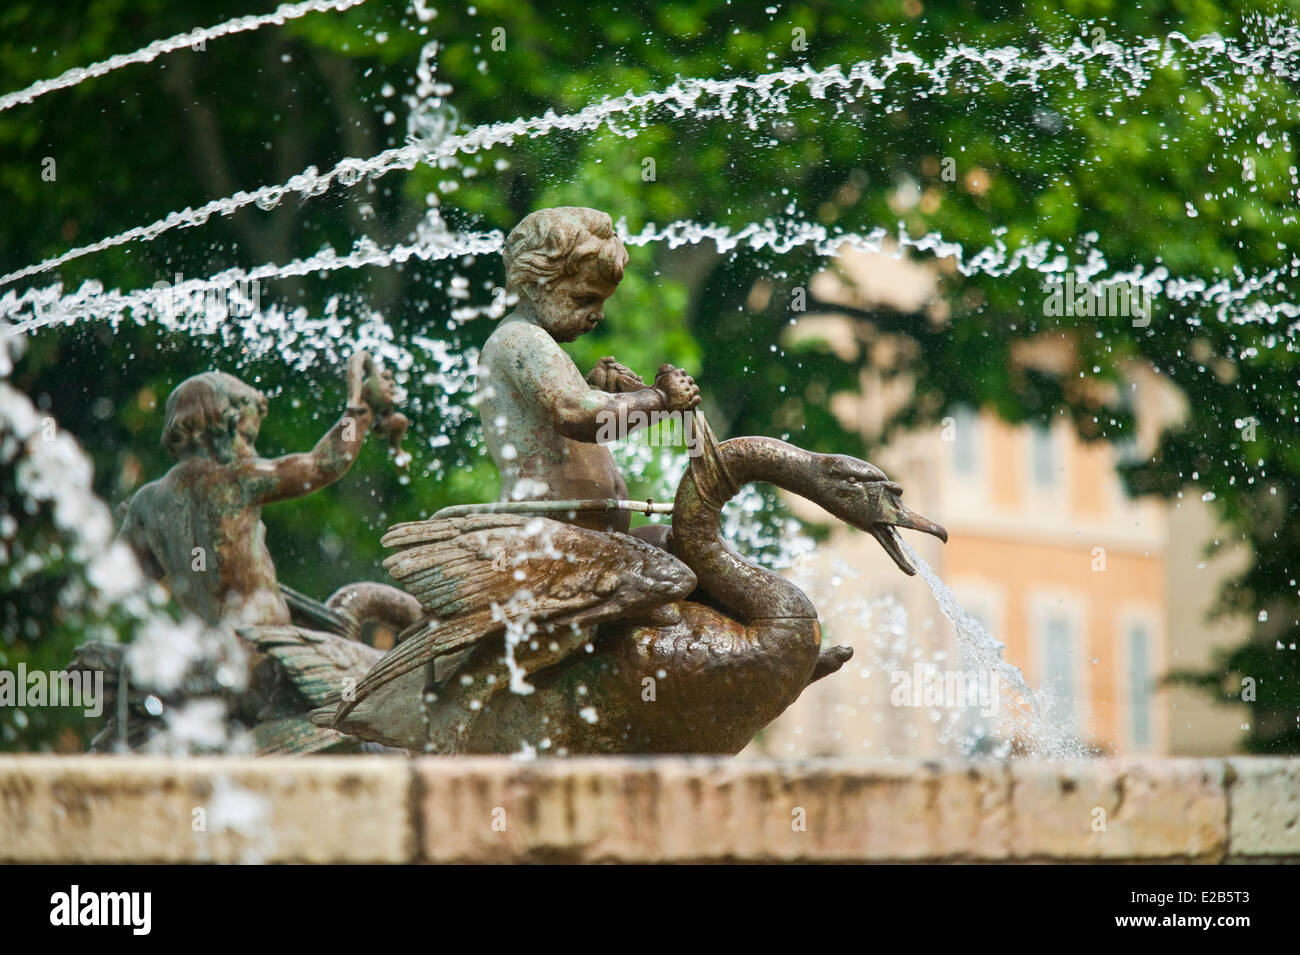 France, Bouches du Rhone, Aix en Provence, the Rotonde fountain Stock Photo